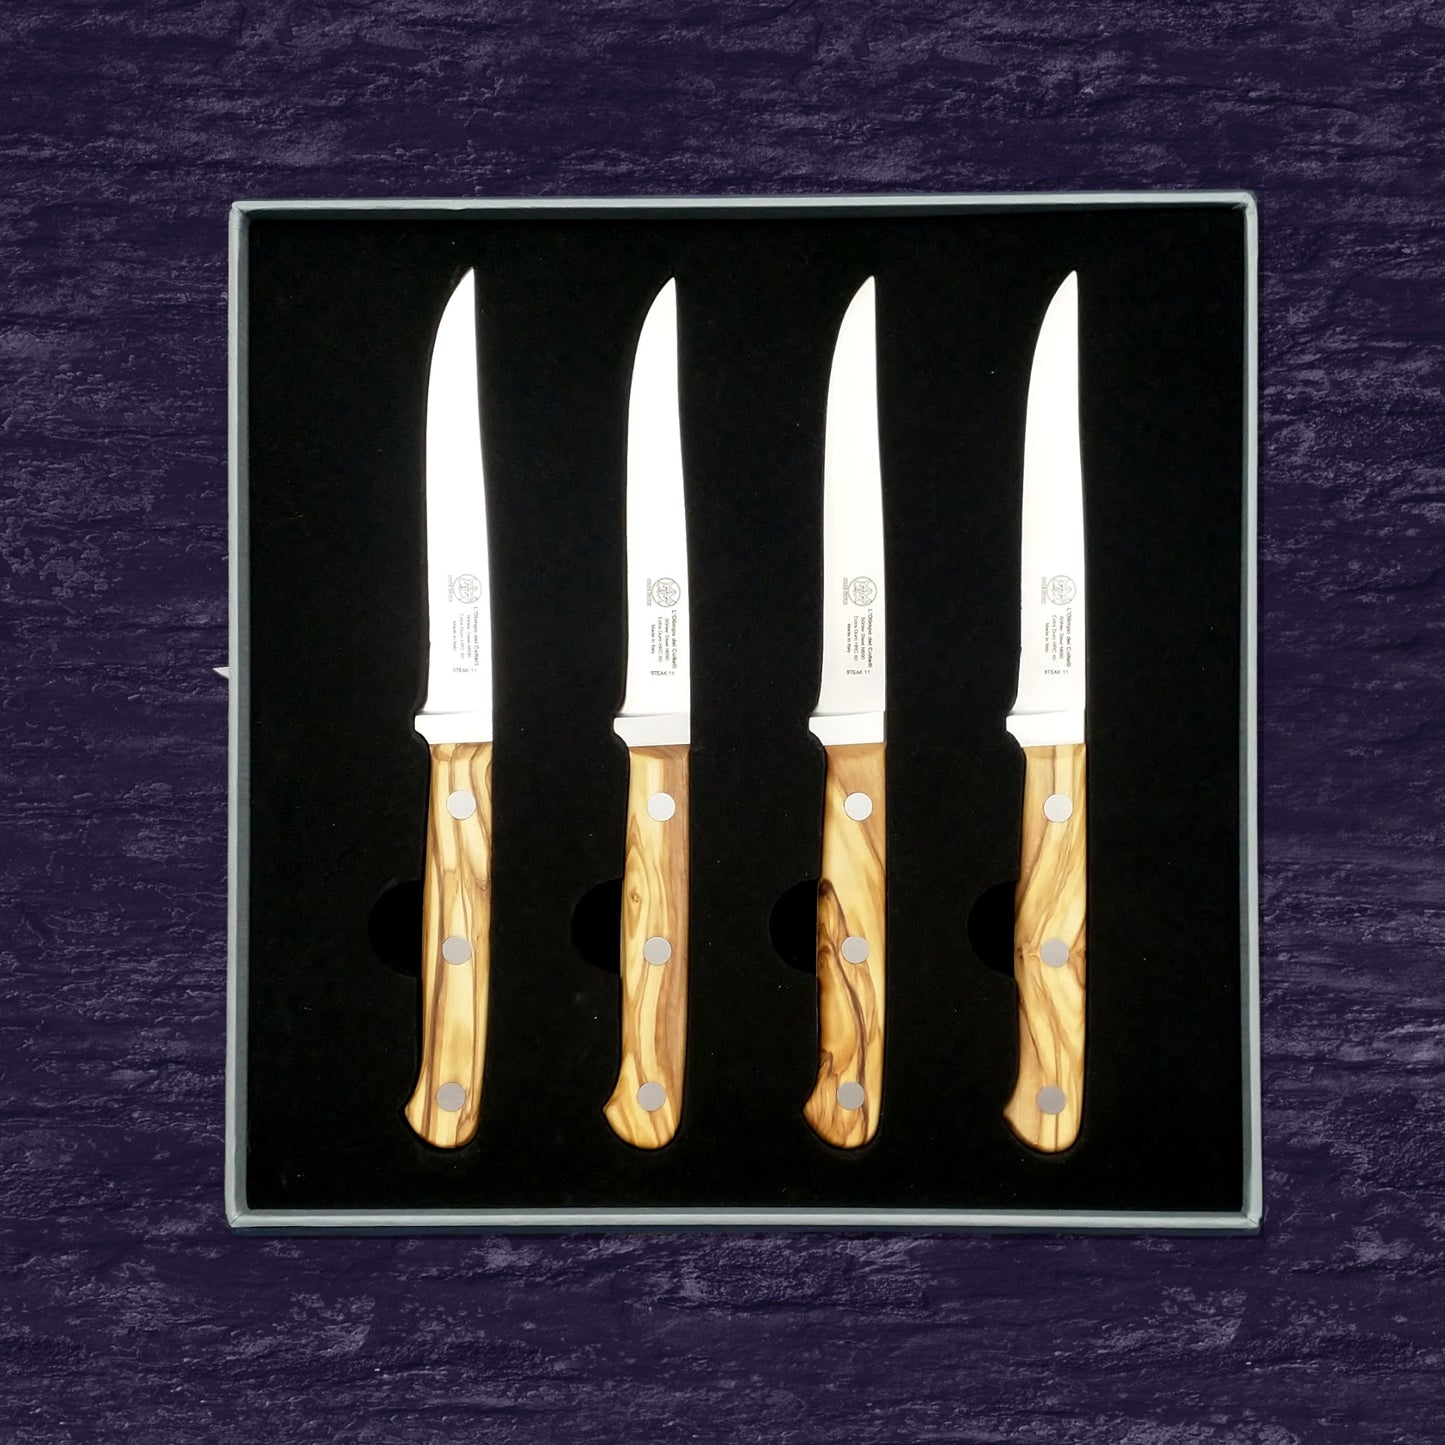 
                  
                    Set of Four Steak Knives - Plain Edge Blade 4.33” - Böhler n690 Stainless Steel - Hrc 60 - Olive Wood Handle
                  
                